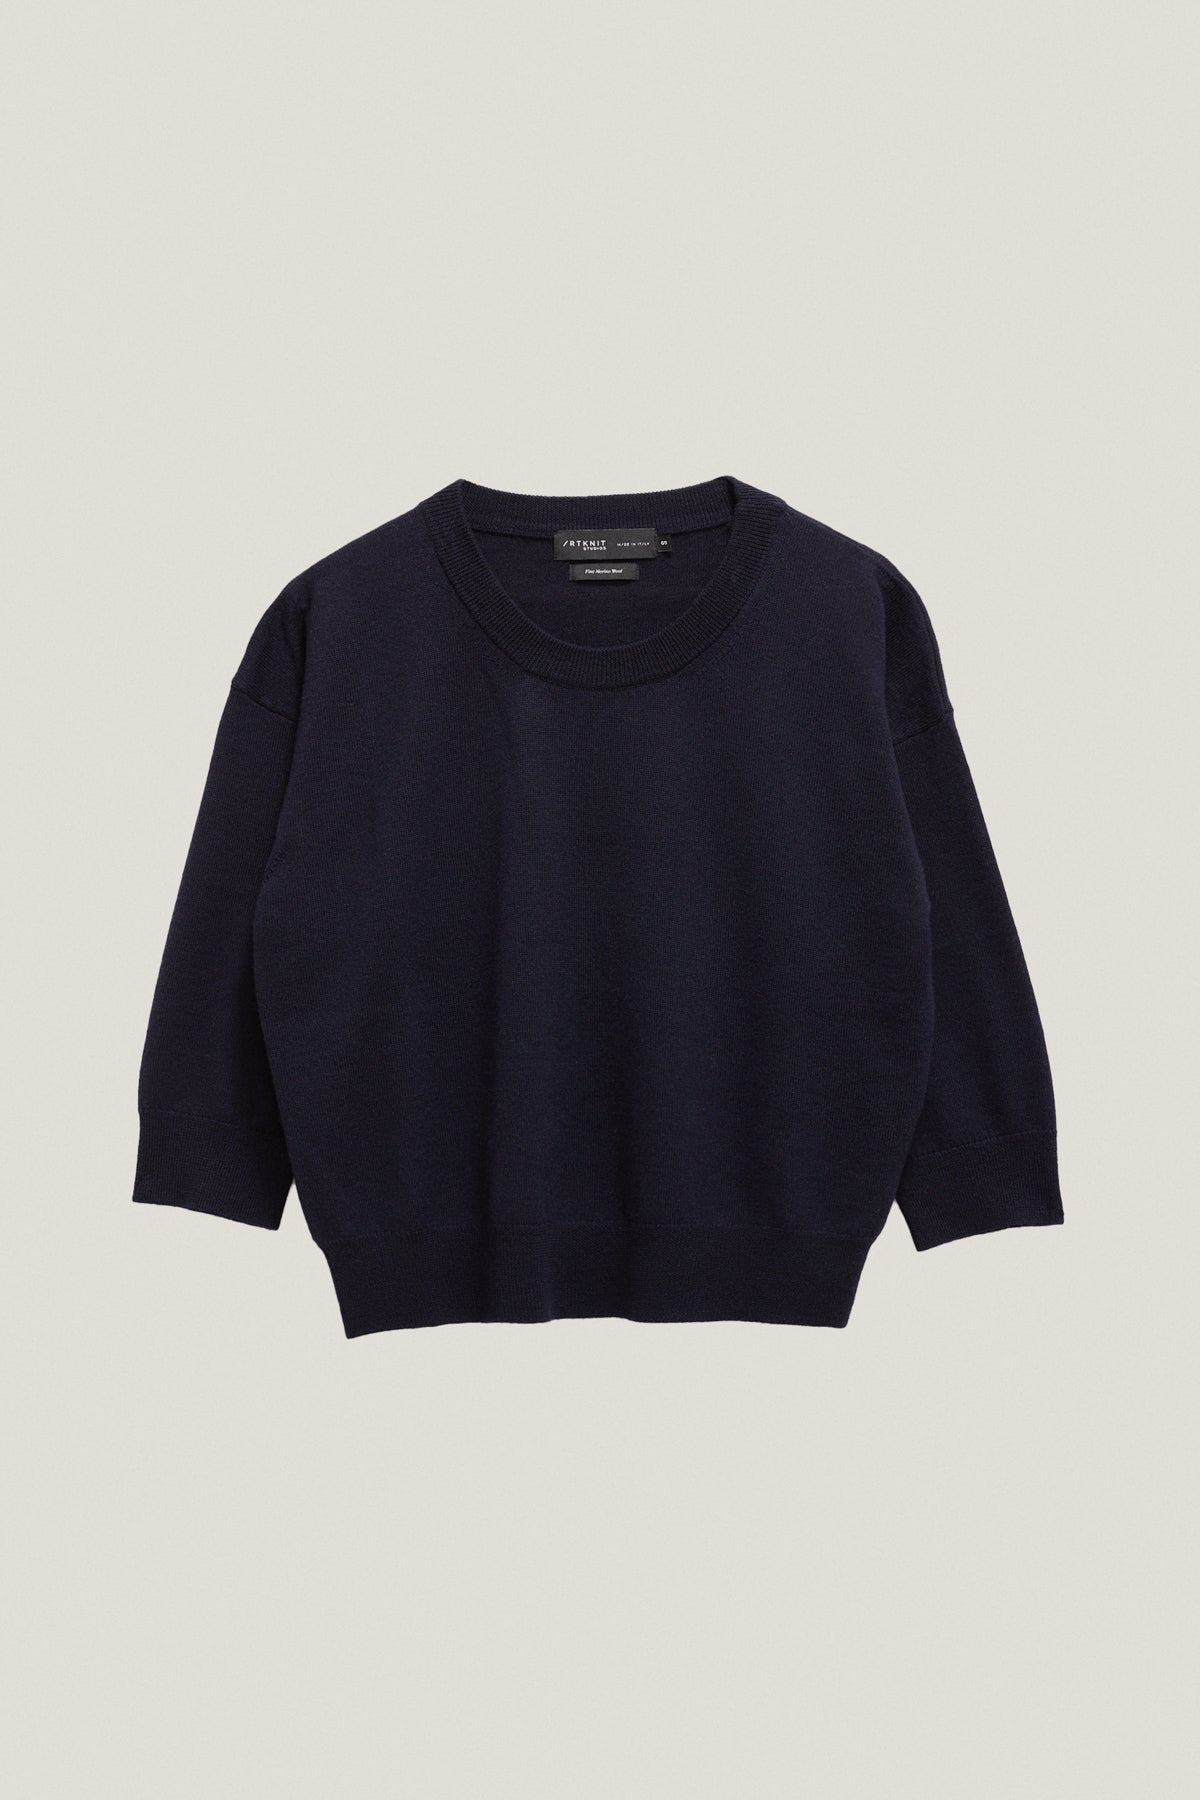 Oxford Blue | The Merino Wool Boxy T-Shirt